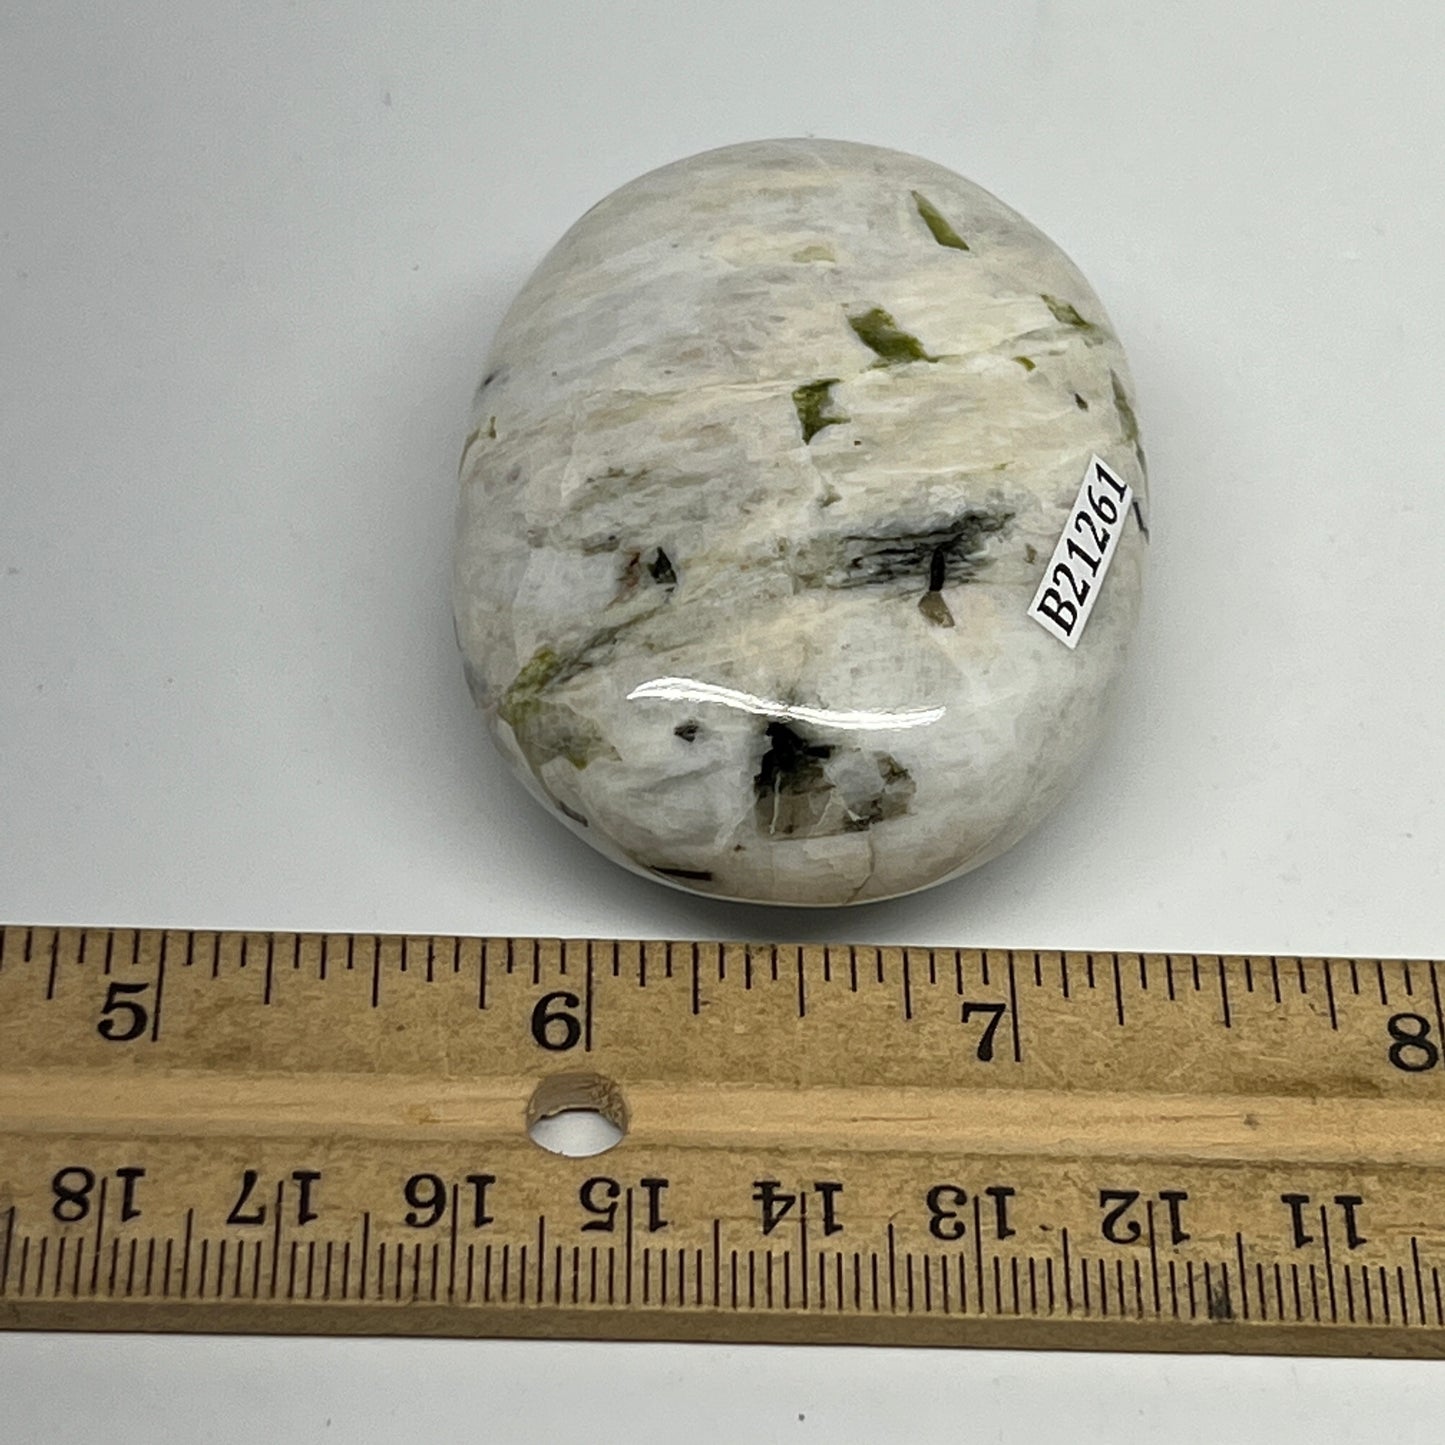 98g,2.3"x1.7"x0.9", Rainbow Moonstone Palm-Stone Polished from India, B21261